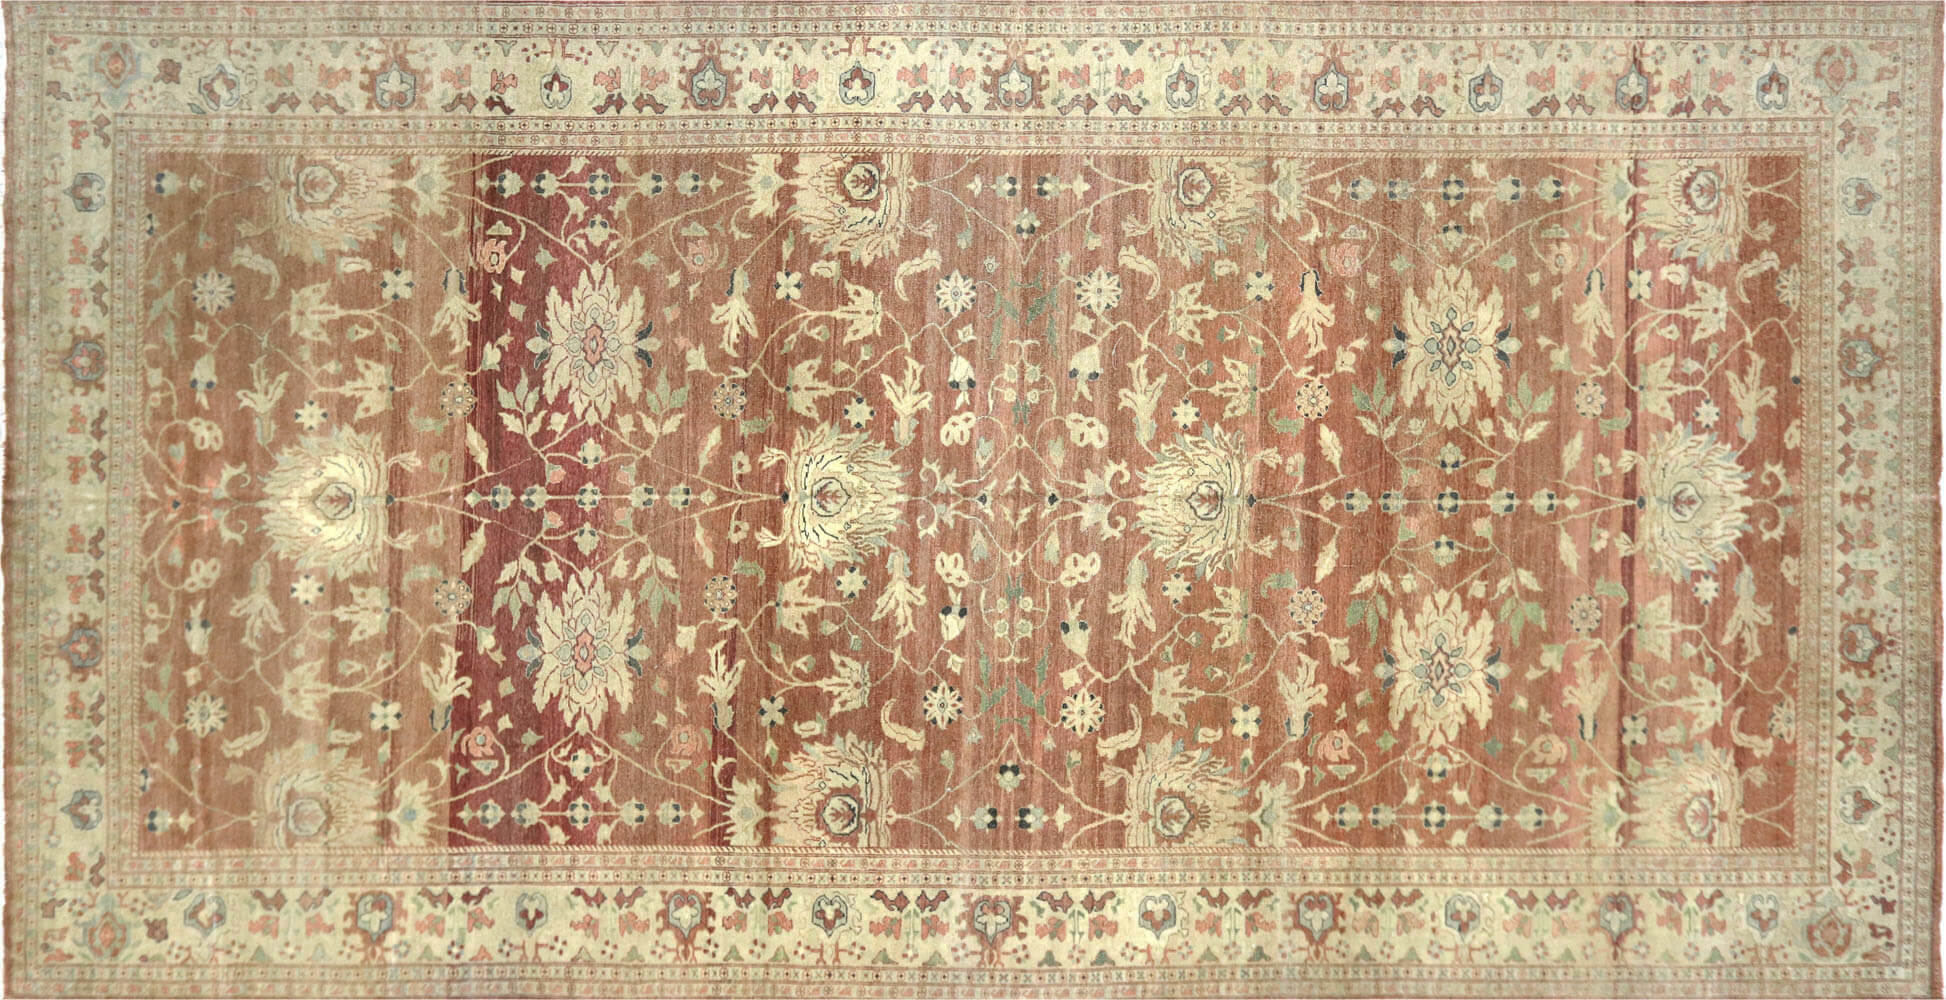 Recently Woven Egyptian Tabriz Carpet - 9'11" x 19'